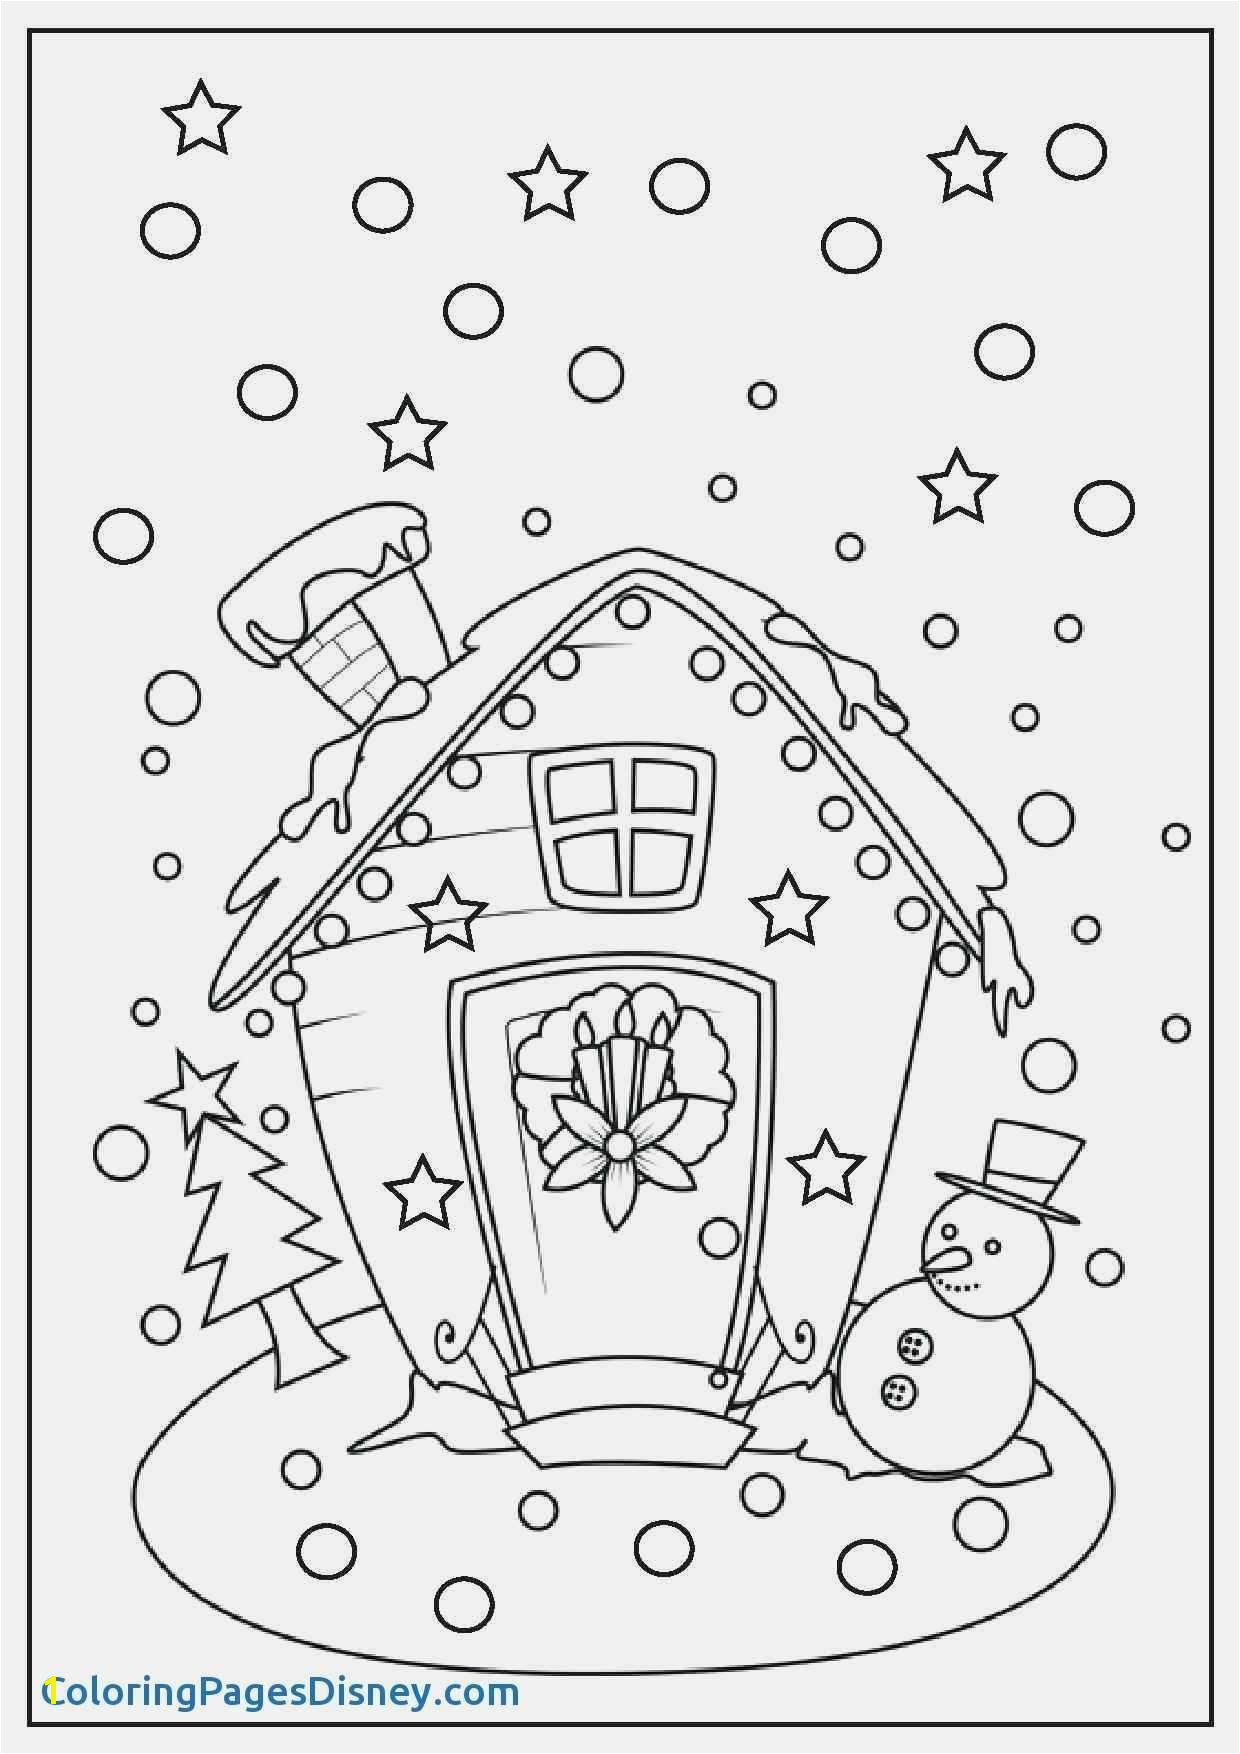 Free Printable Disney Princess Christmas Coloring Pages Cool Coloring Pages Printable New Printable Cds 0d Coloring